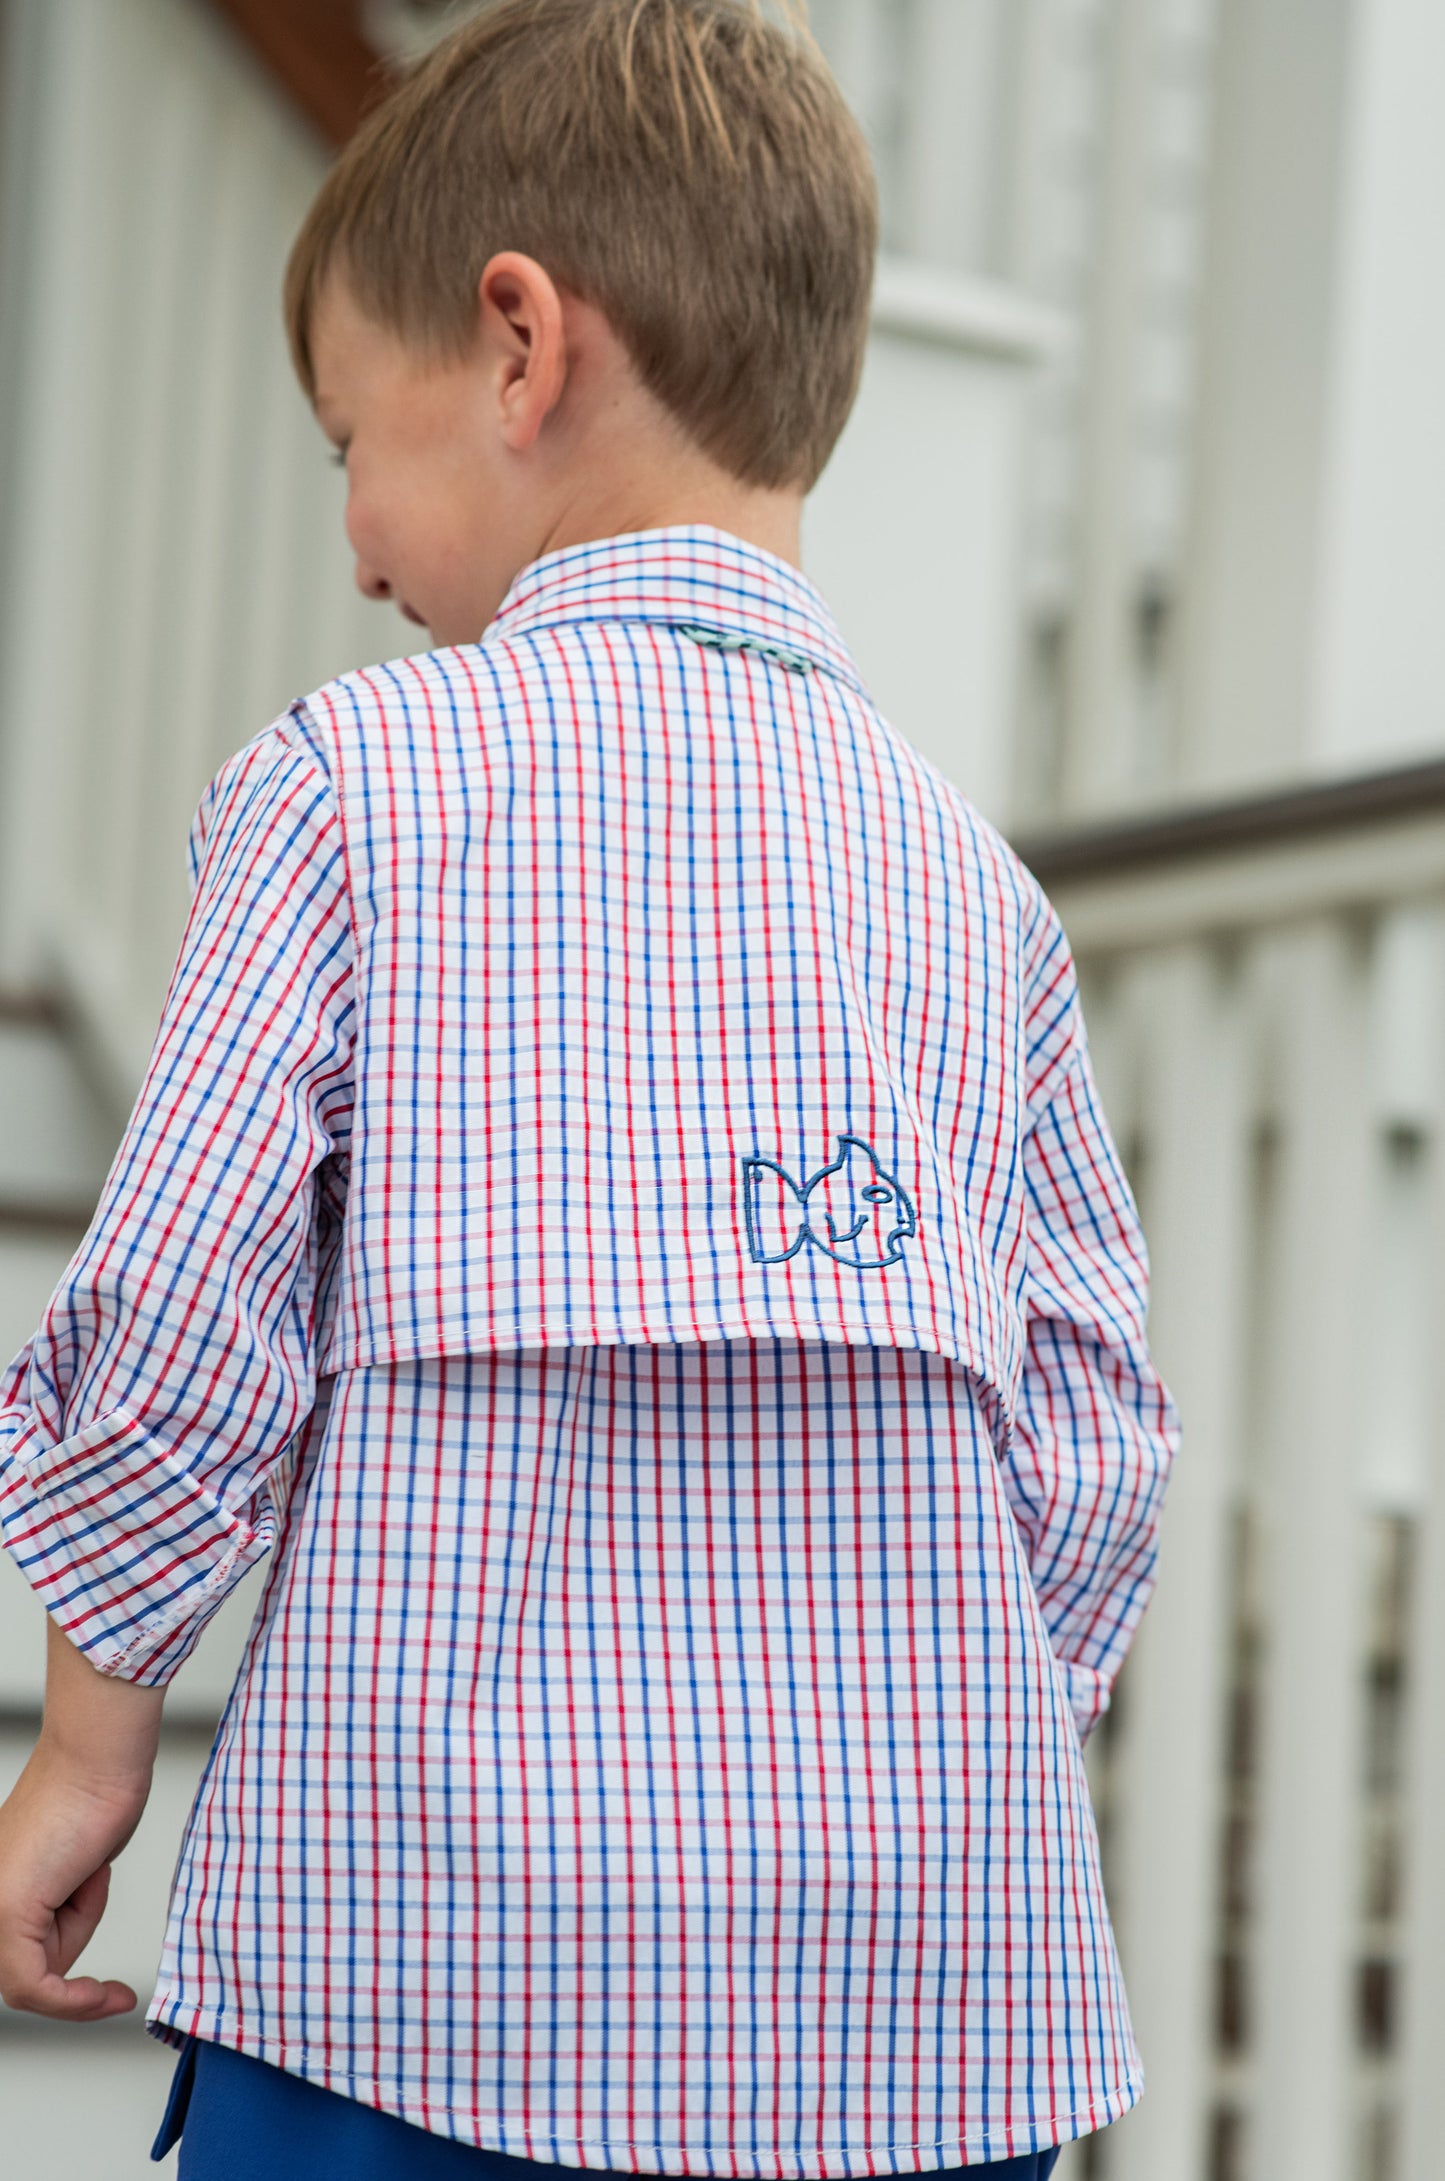 Prodoh Founders Kids Fishing Shirt - Americana Plaid